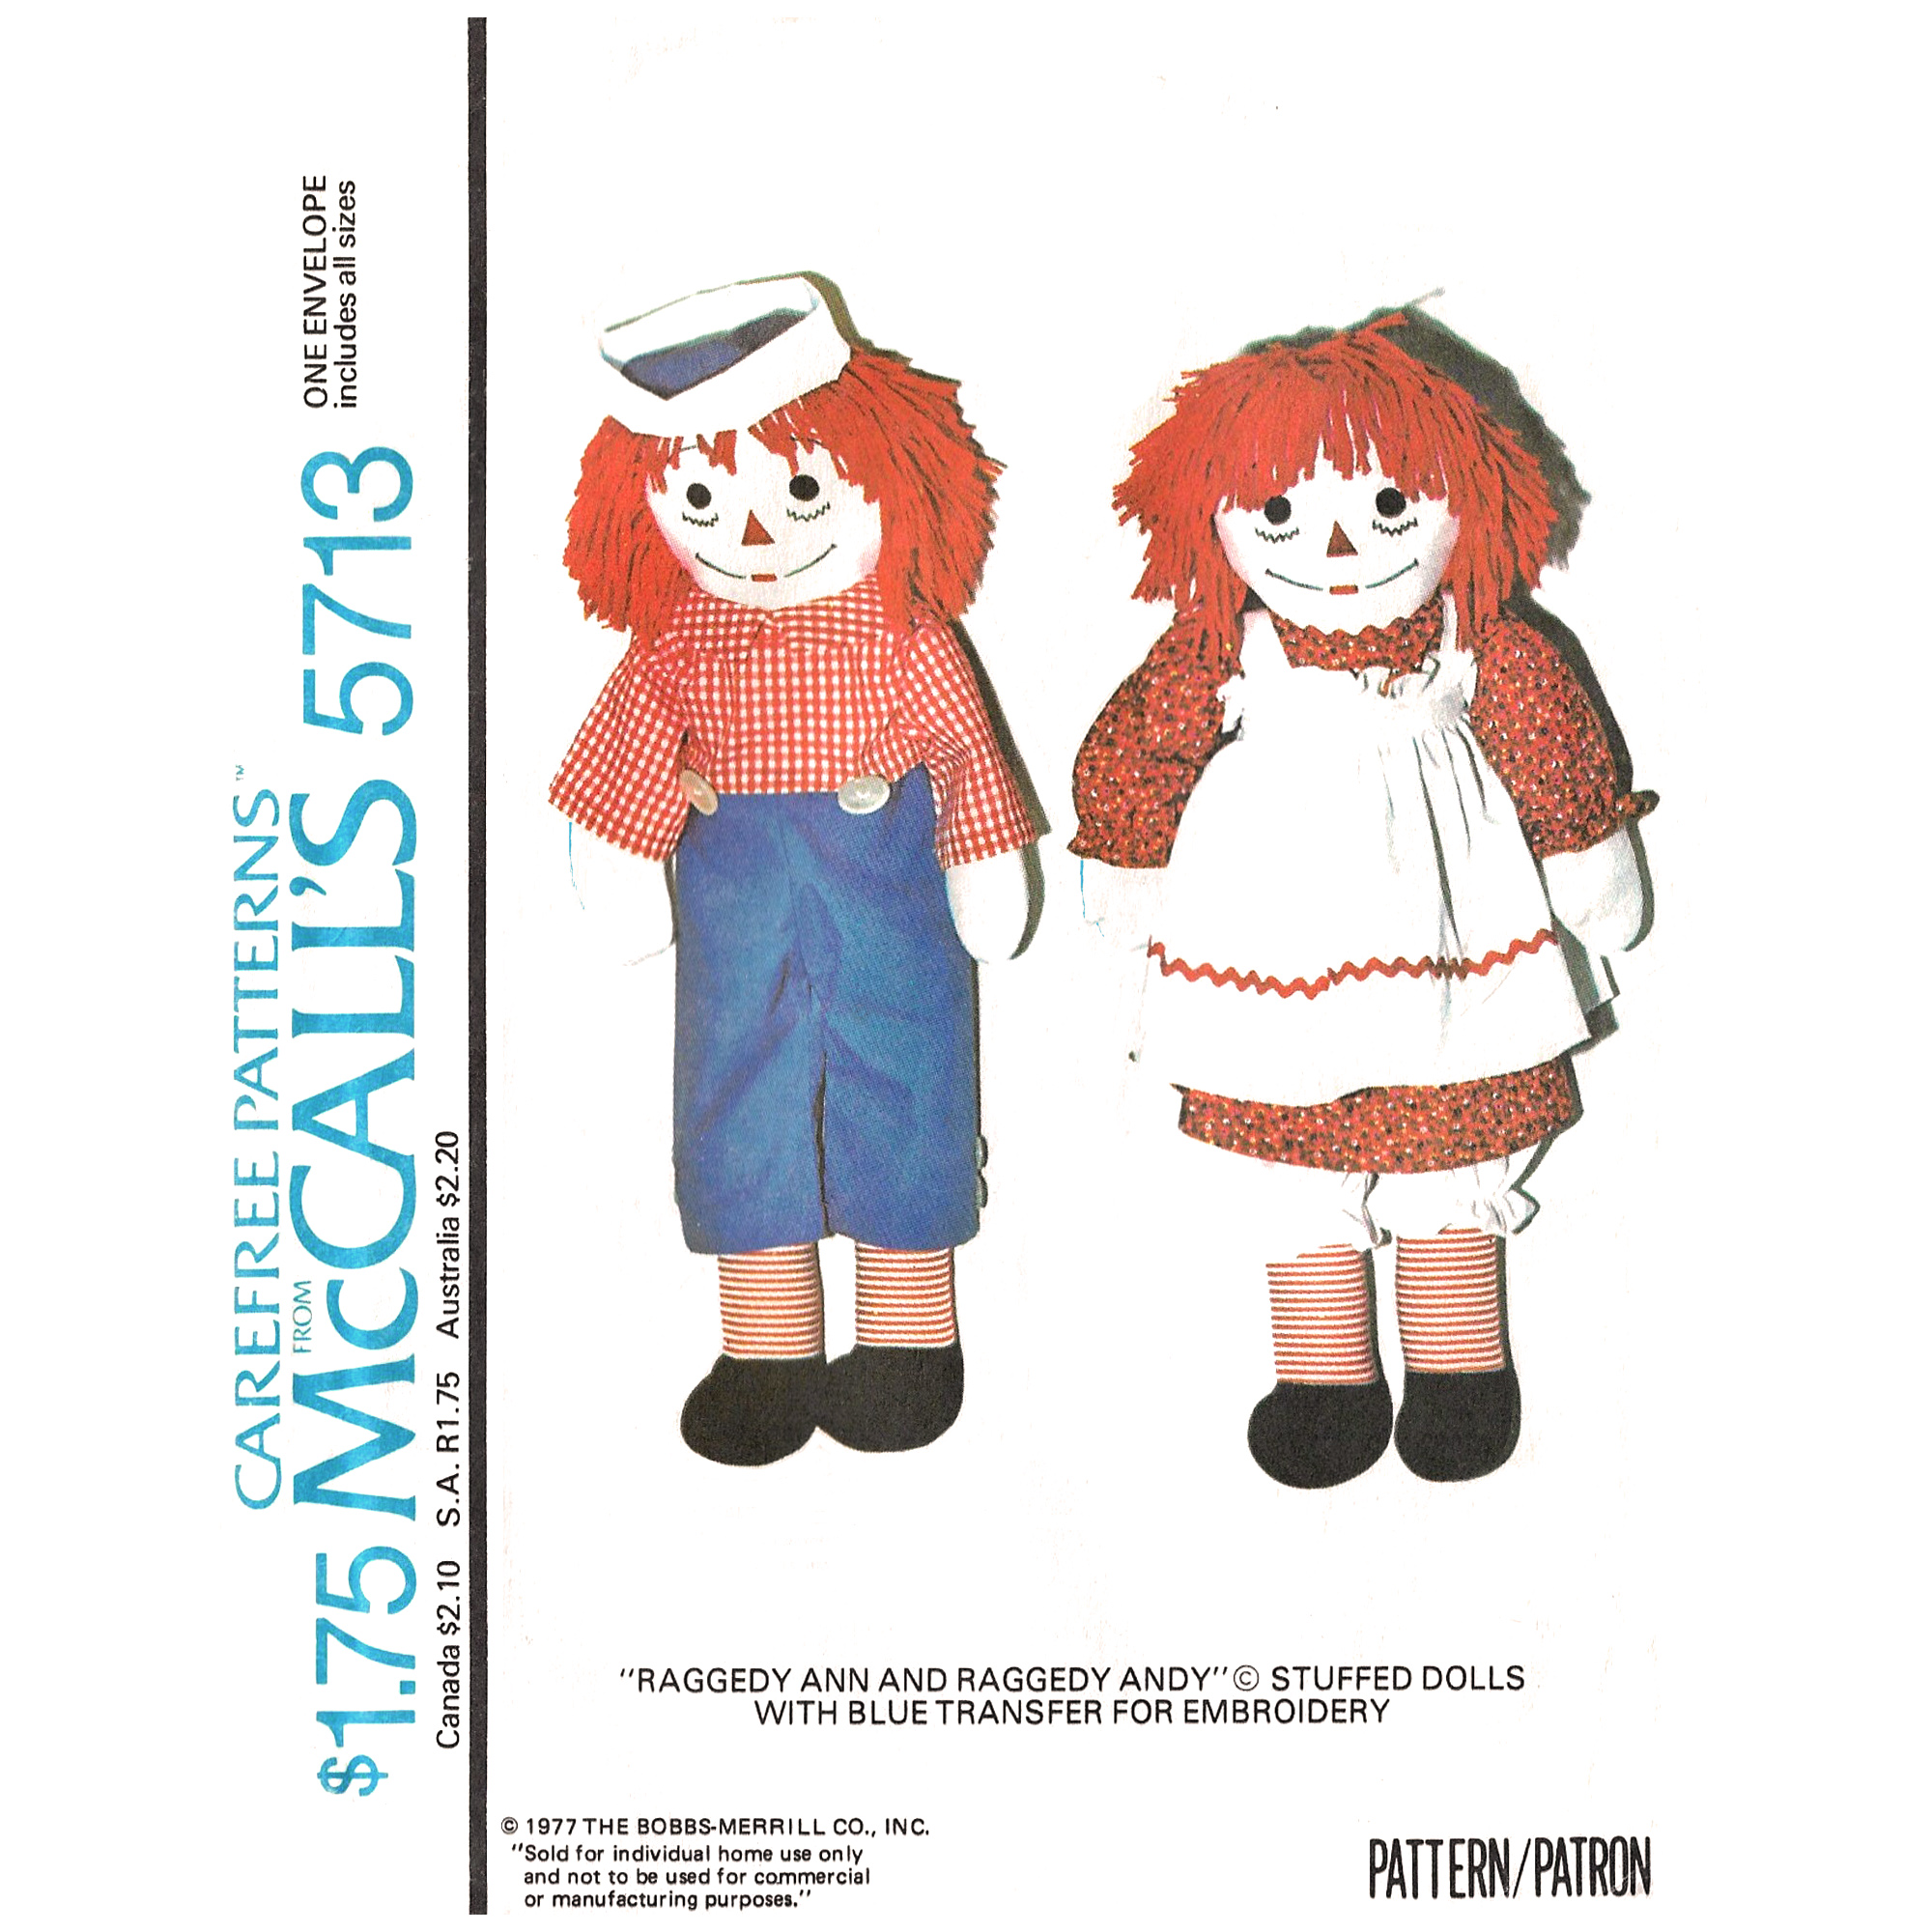 McCalls 5713 doll pattern